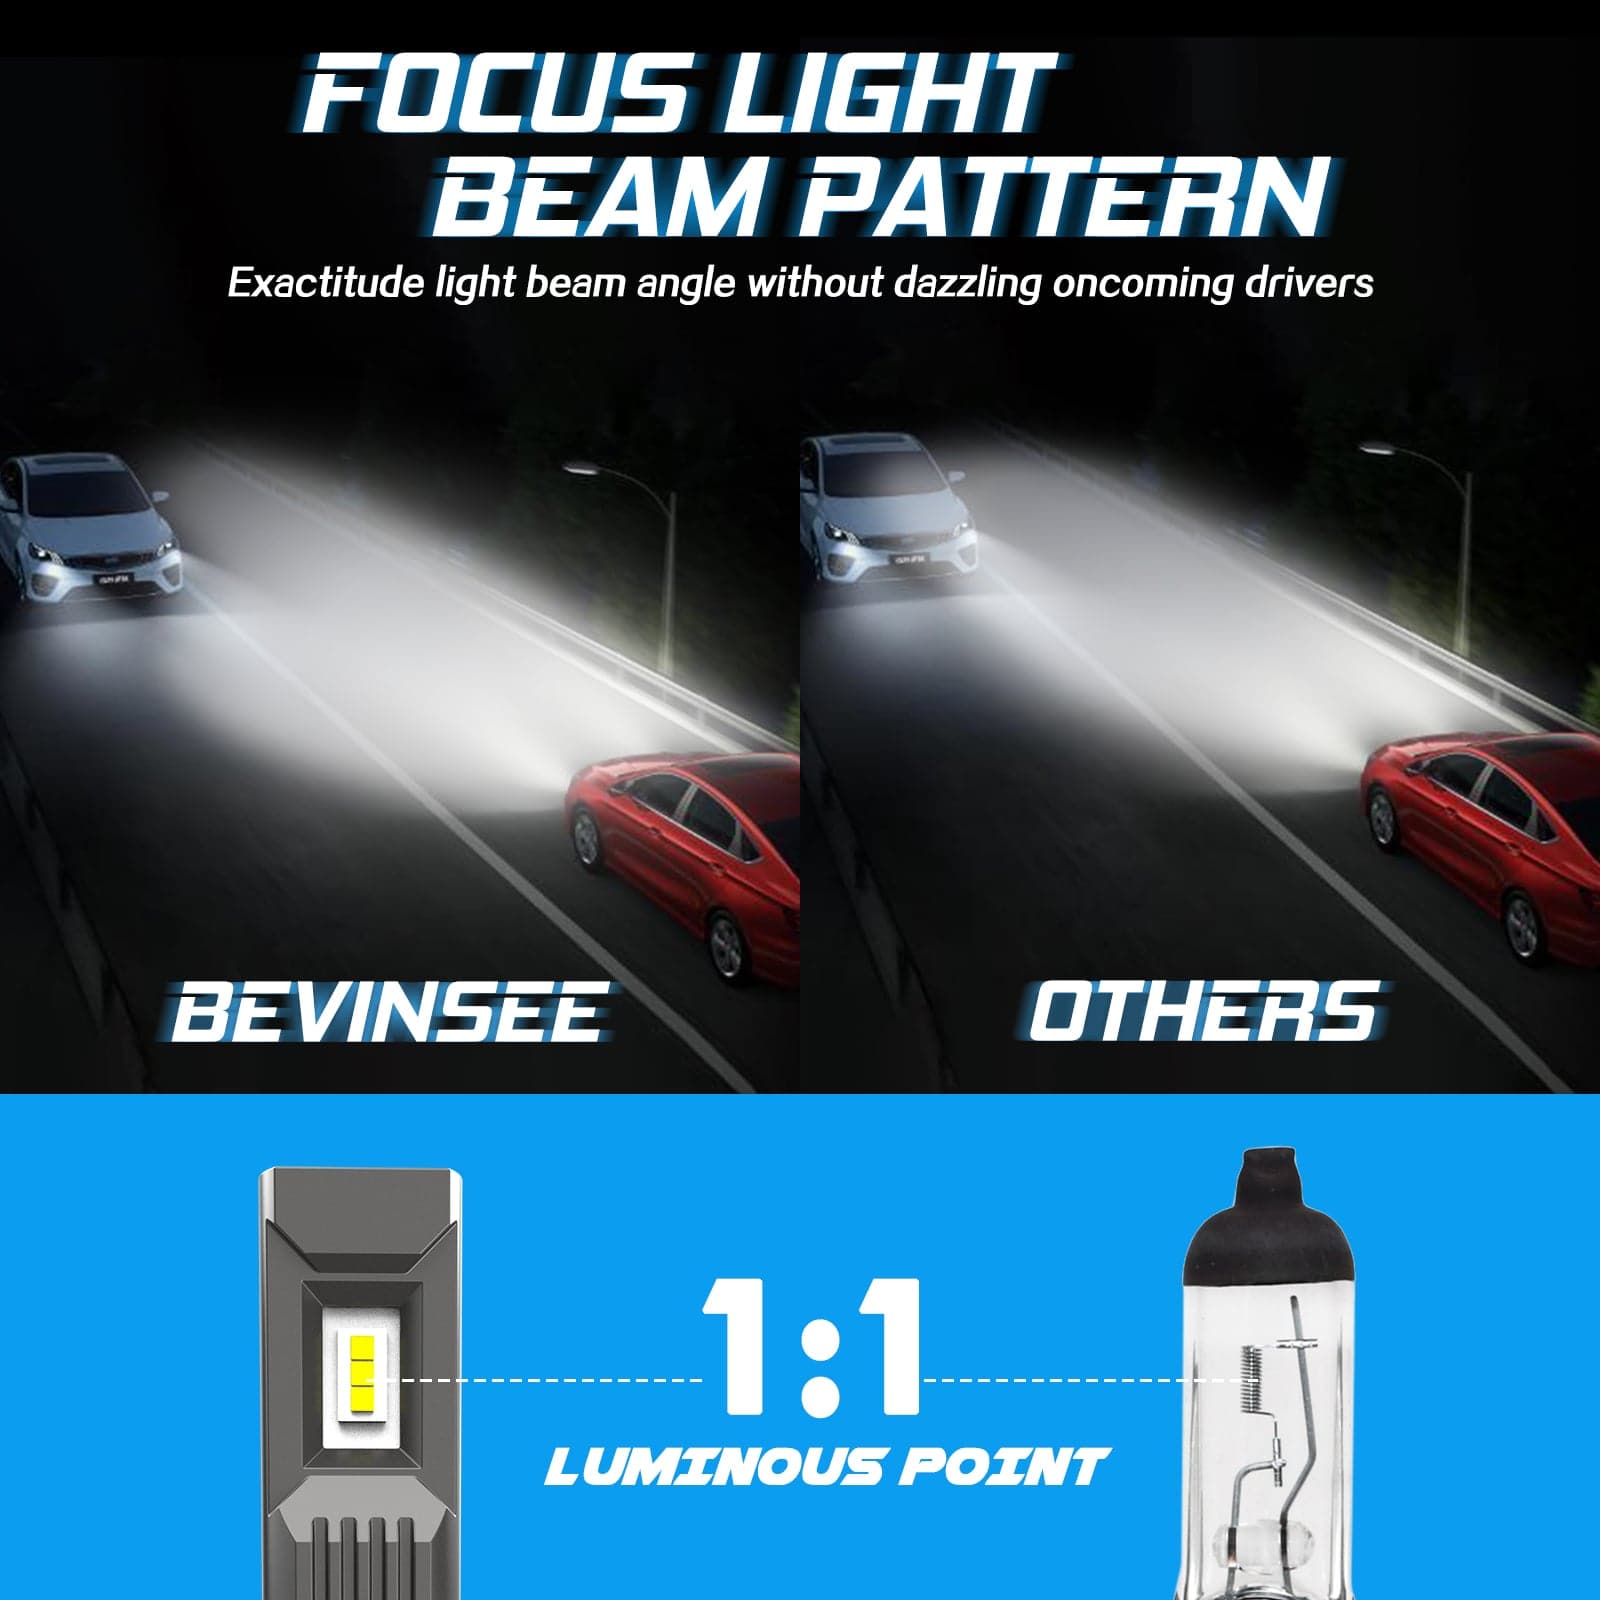 Canbus H15 LED Headlight Hi-Beam with DRL Function for VW Golf 6 Golf 7 -  China H15 LED, VW Golf H15 LED Bulb